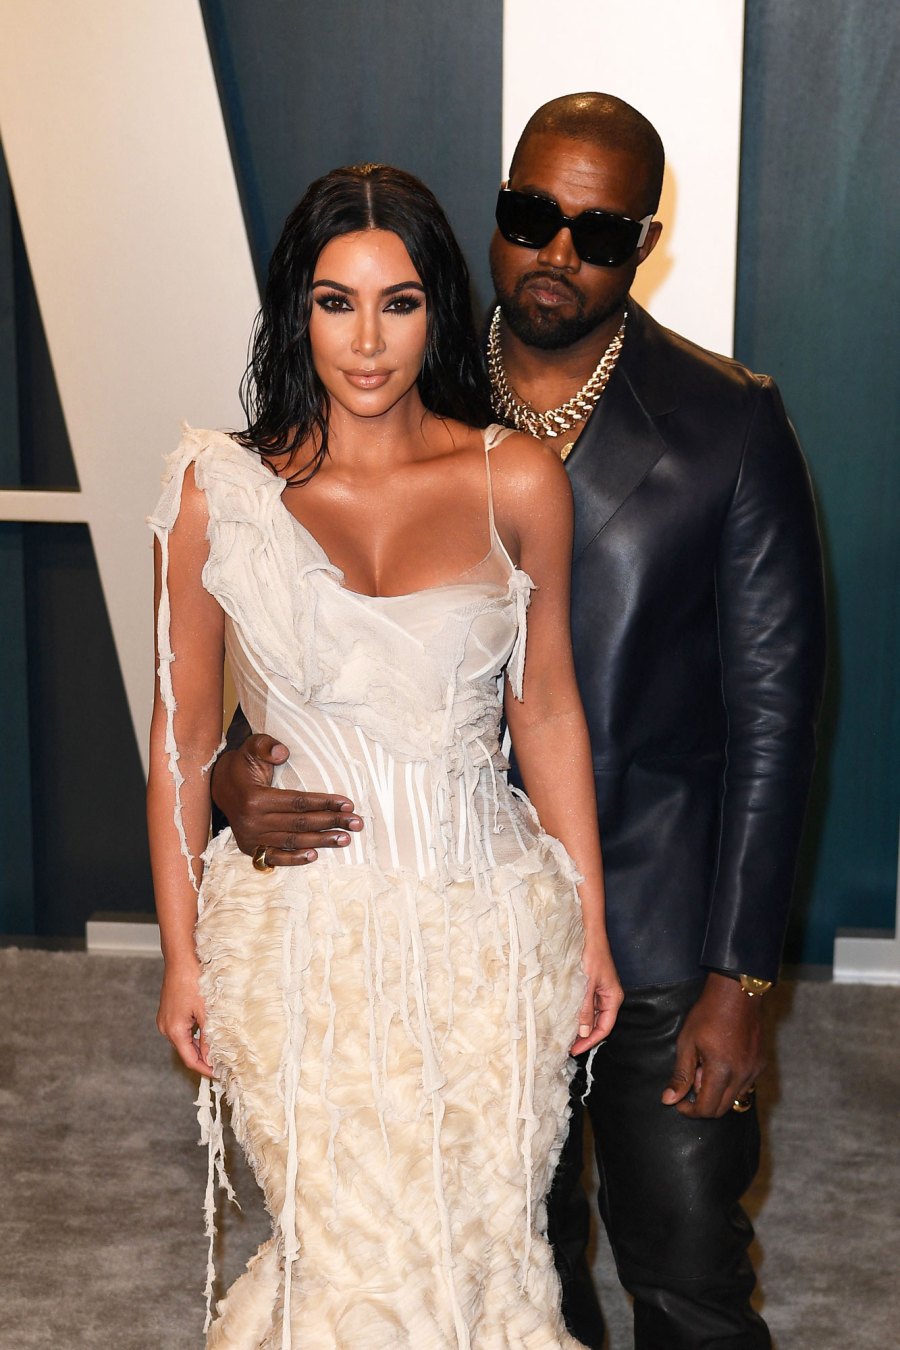 Kim Kardashian Is Worried Future Boyfriends Will Be ‘Scared’ of Kanye West